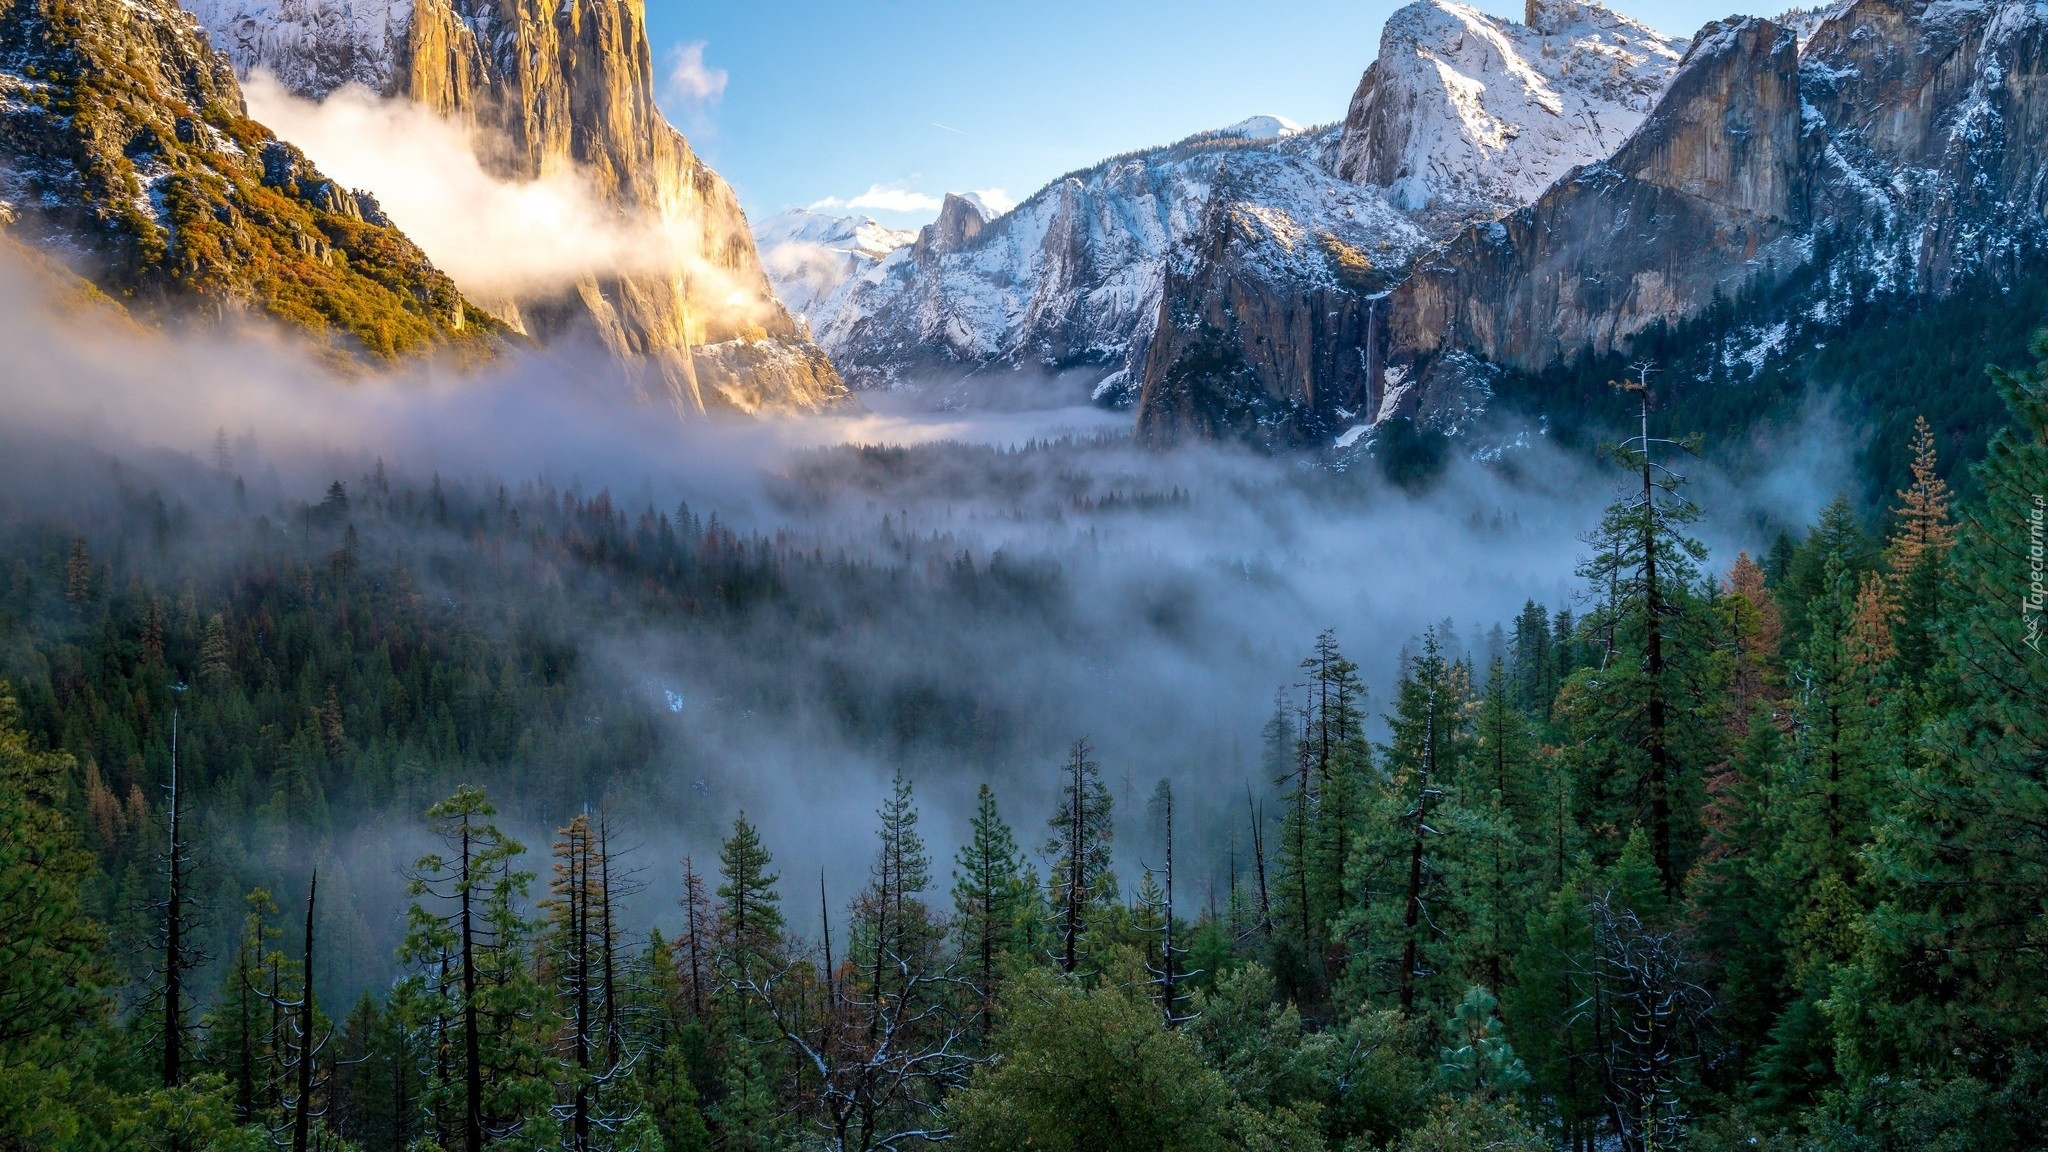 Dolina Yosemite Valley, Park Narodowy Yosemite, Lasy, Mgła, Góry, Stan Kalifornia, Stany Zjednoczone